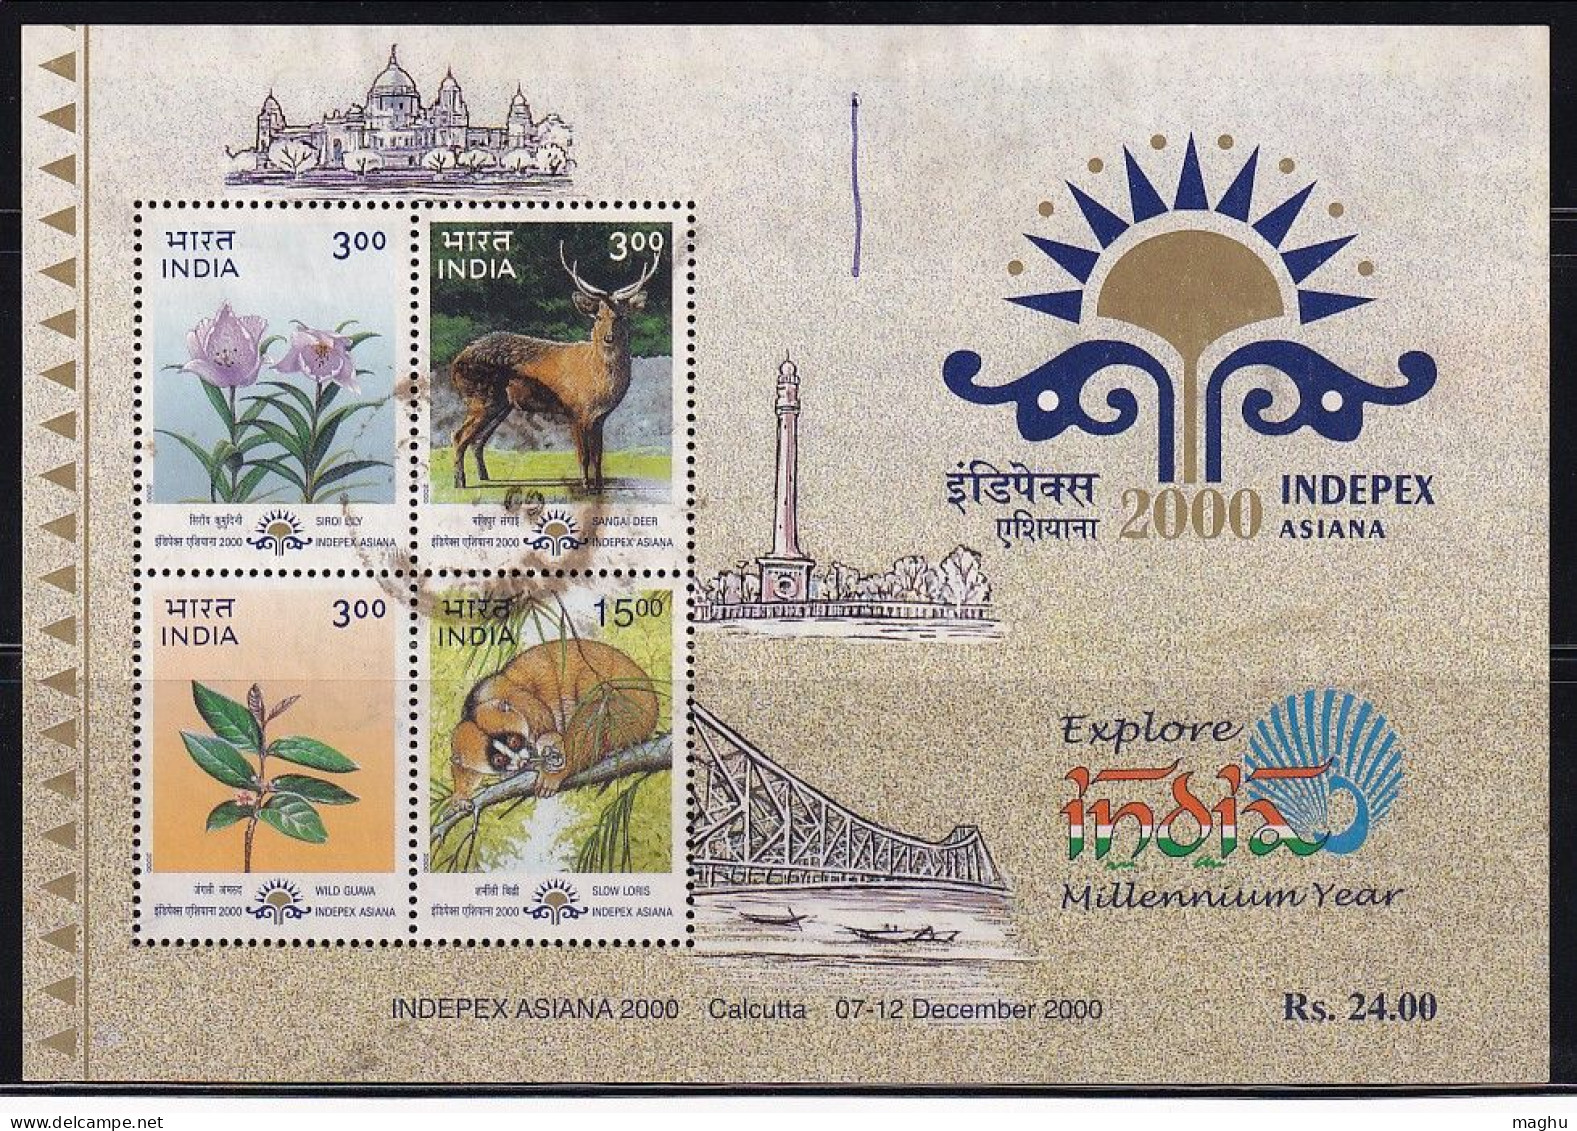 Postal Used India Miniature 2000, INDEPEX ASIANA, Lily Flower, Deer, Guave, Snow Loris, Animal, Bridge, Millenium - Used Stamps